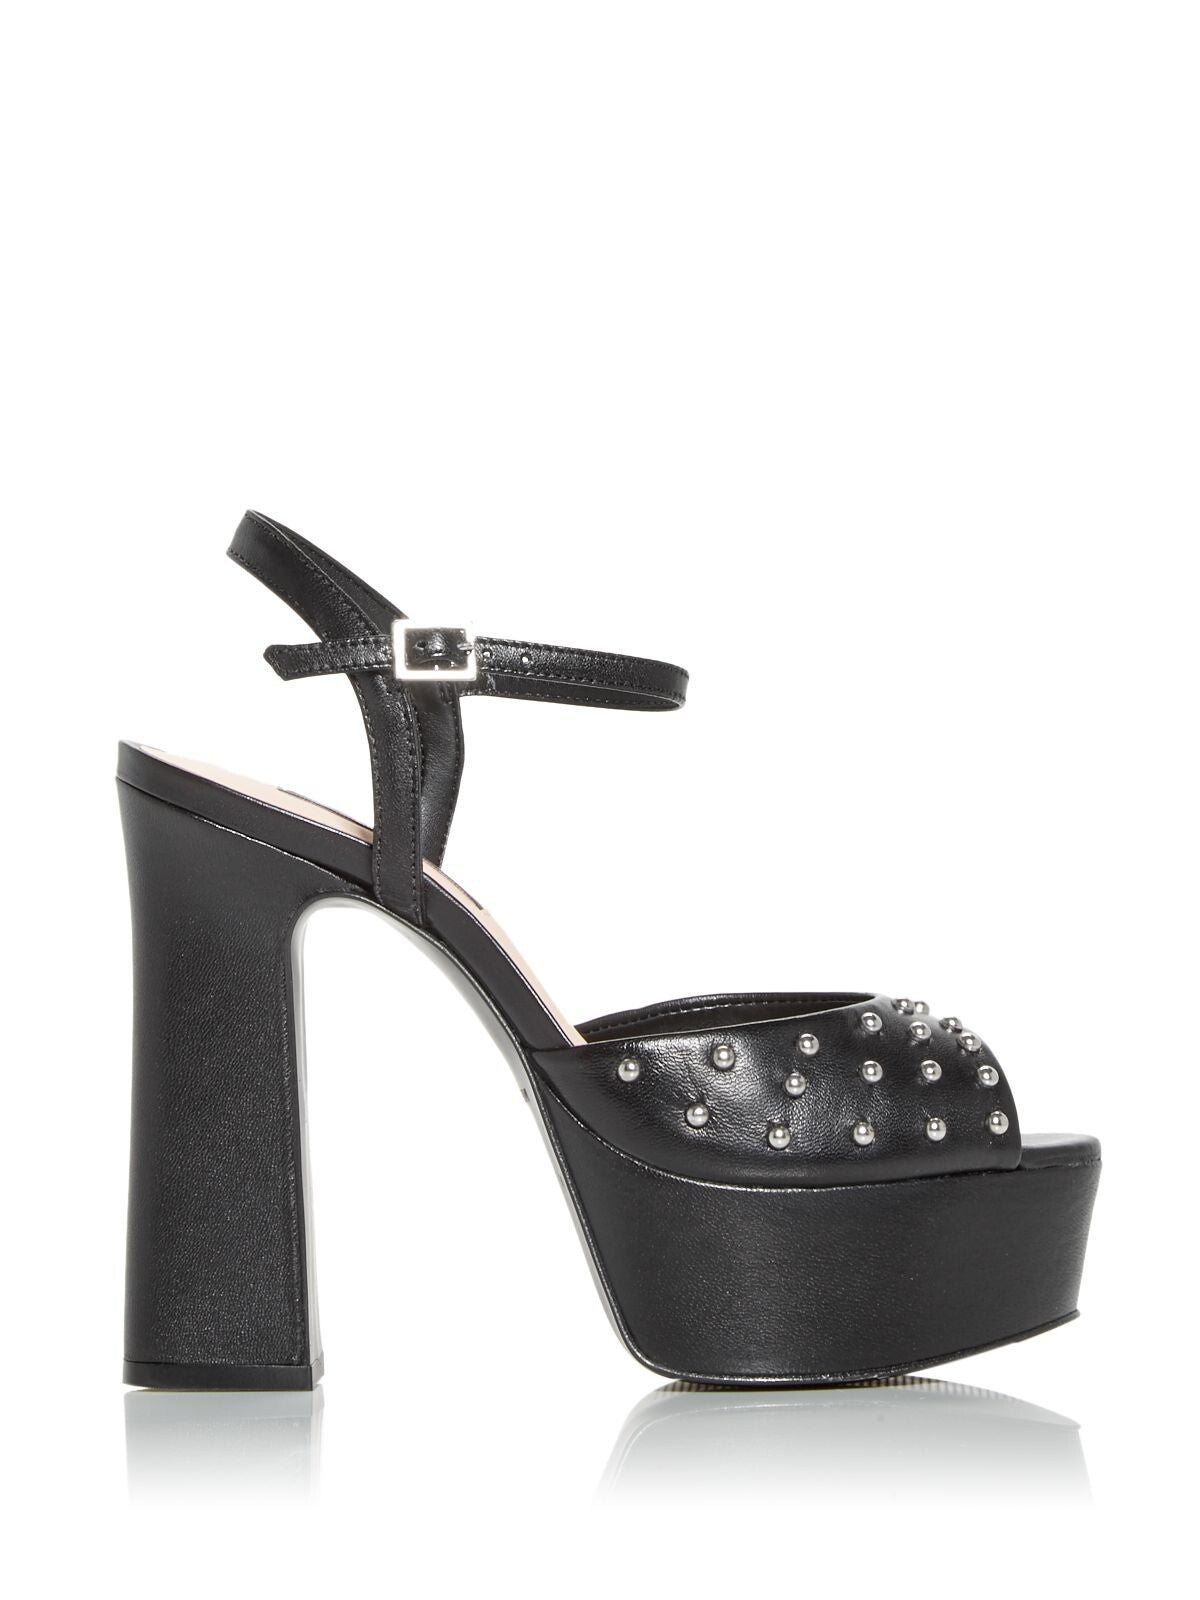 AQUA Womens Black 1-1/2" Platform Ankle Strap Studded Cullen Round Toe Block Heel Buckle Leather Dress Sandals Shoes 10 B